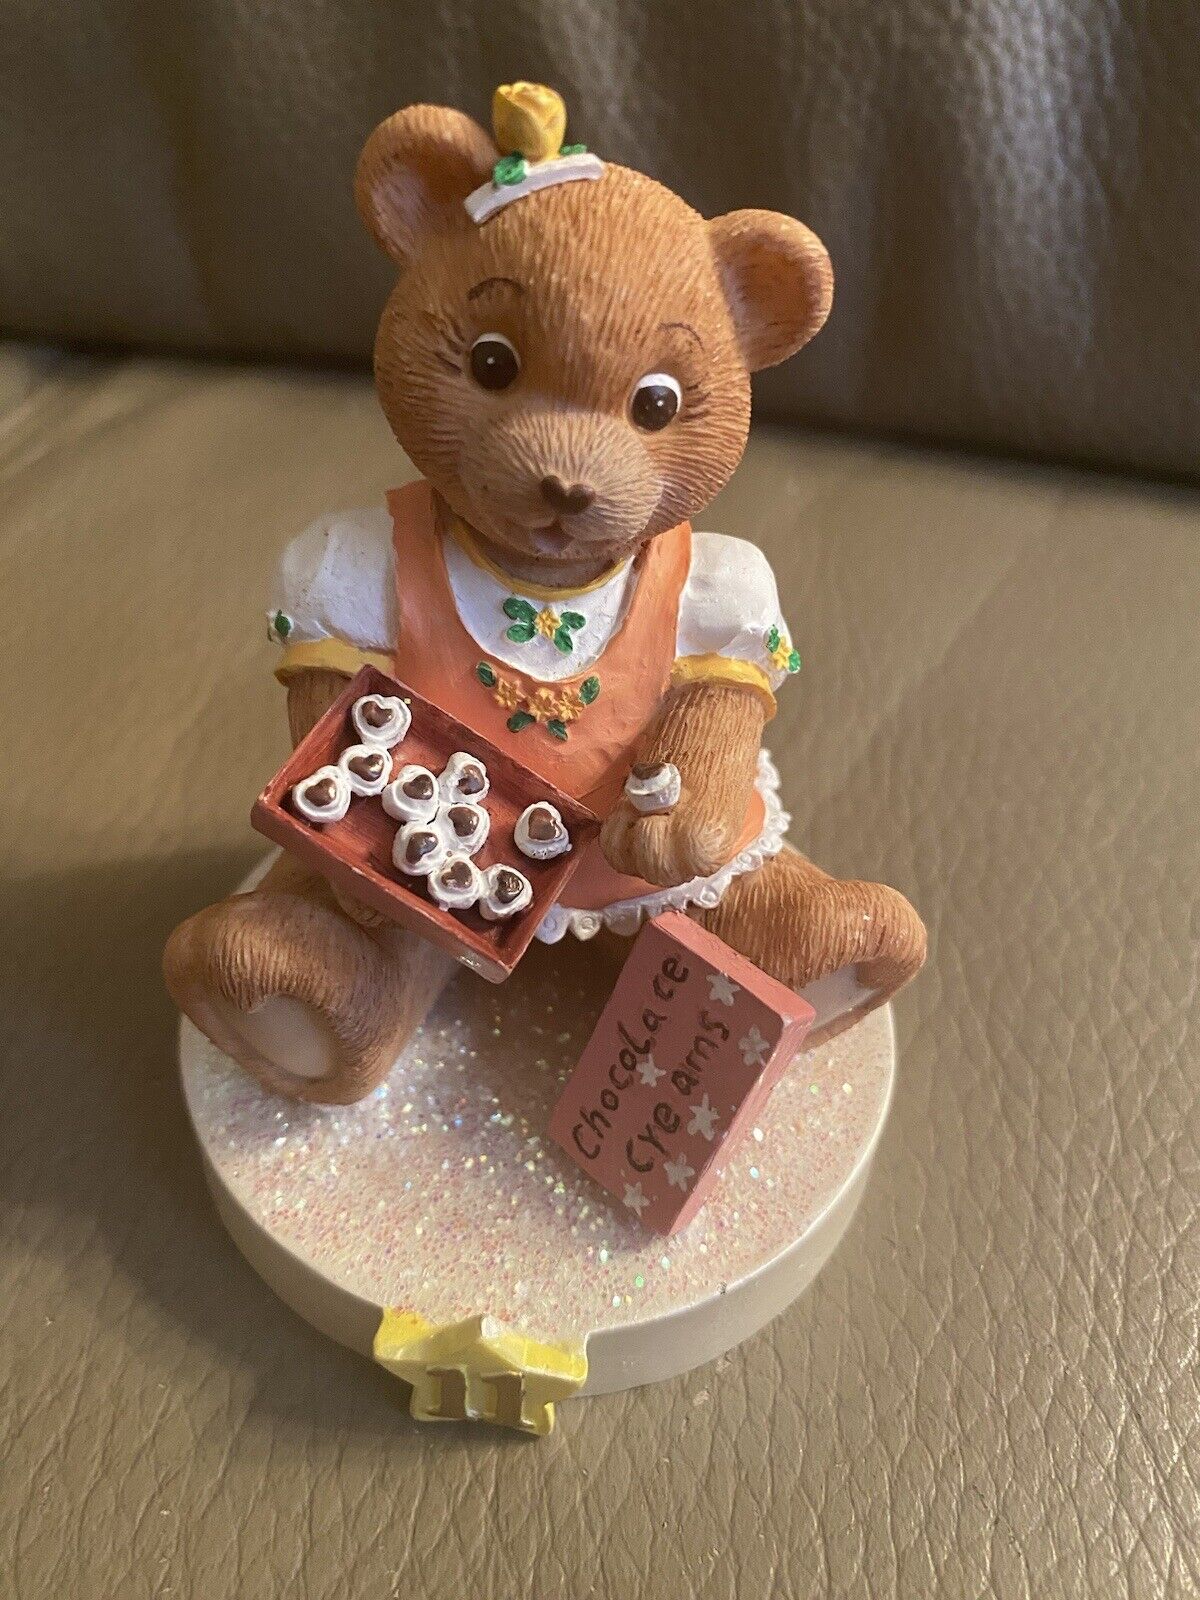 Vintage Theadorables Resin Teddy Bear, Treats Cupcakes Celebration